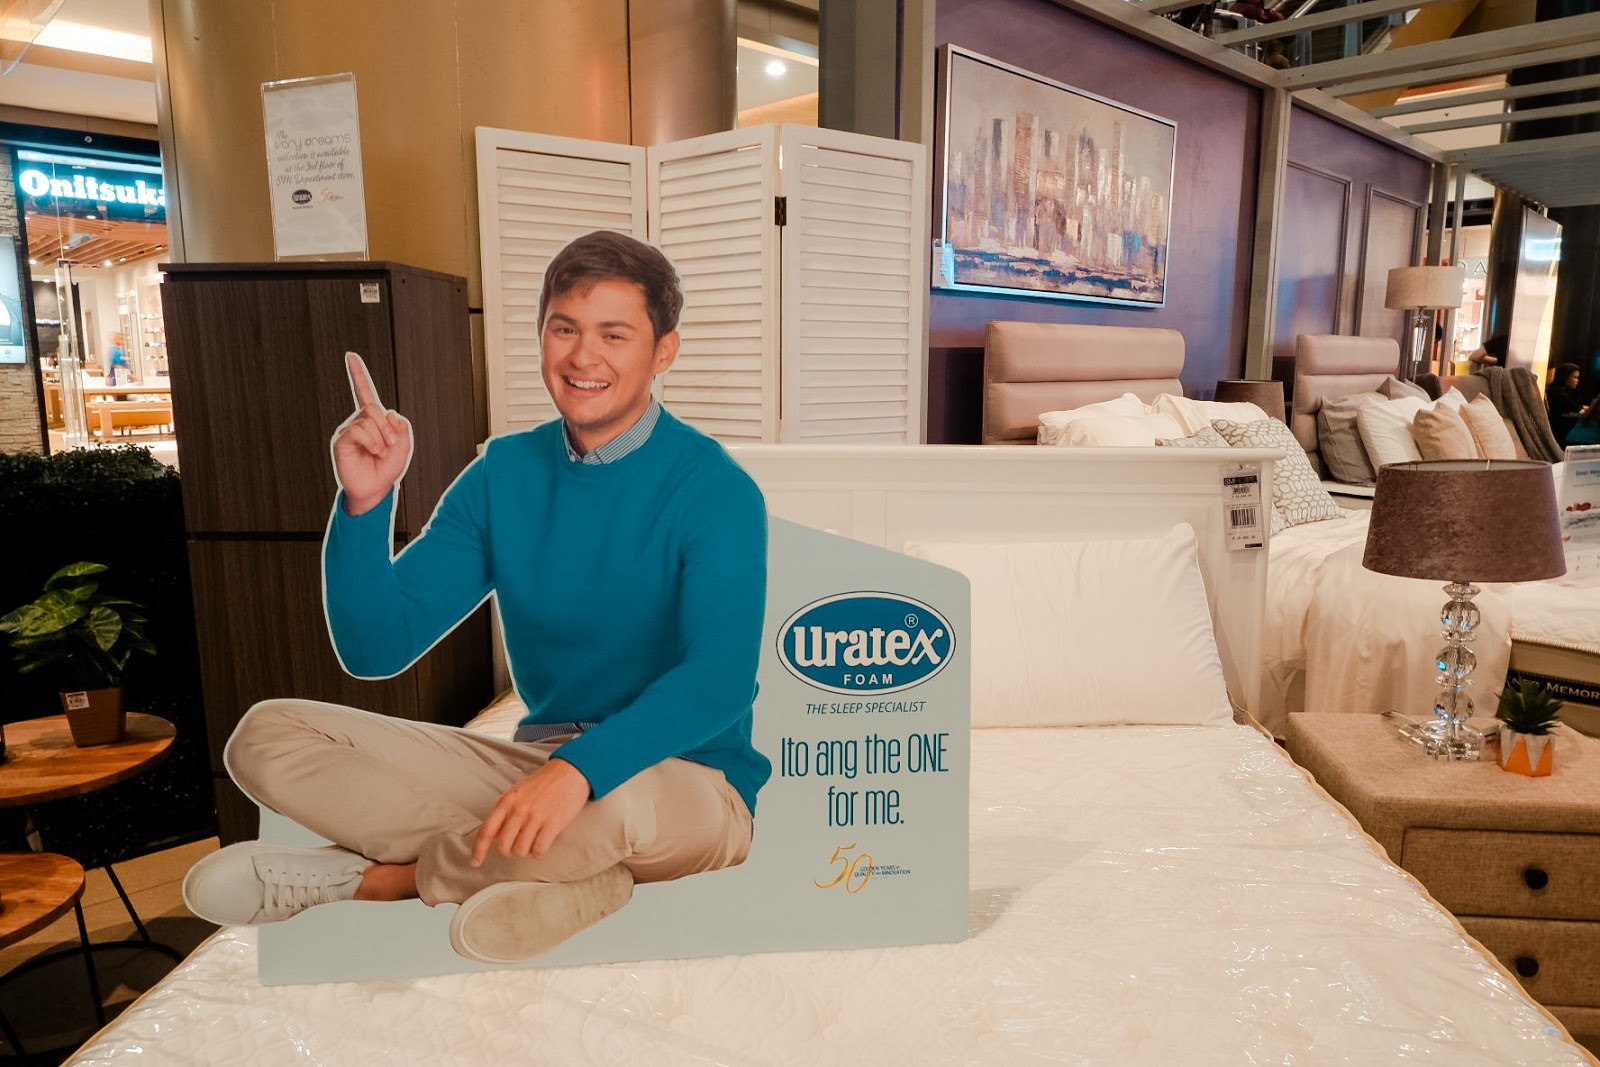 Finding The Perfect Sleep Partner - Uratex